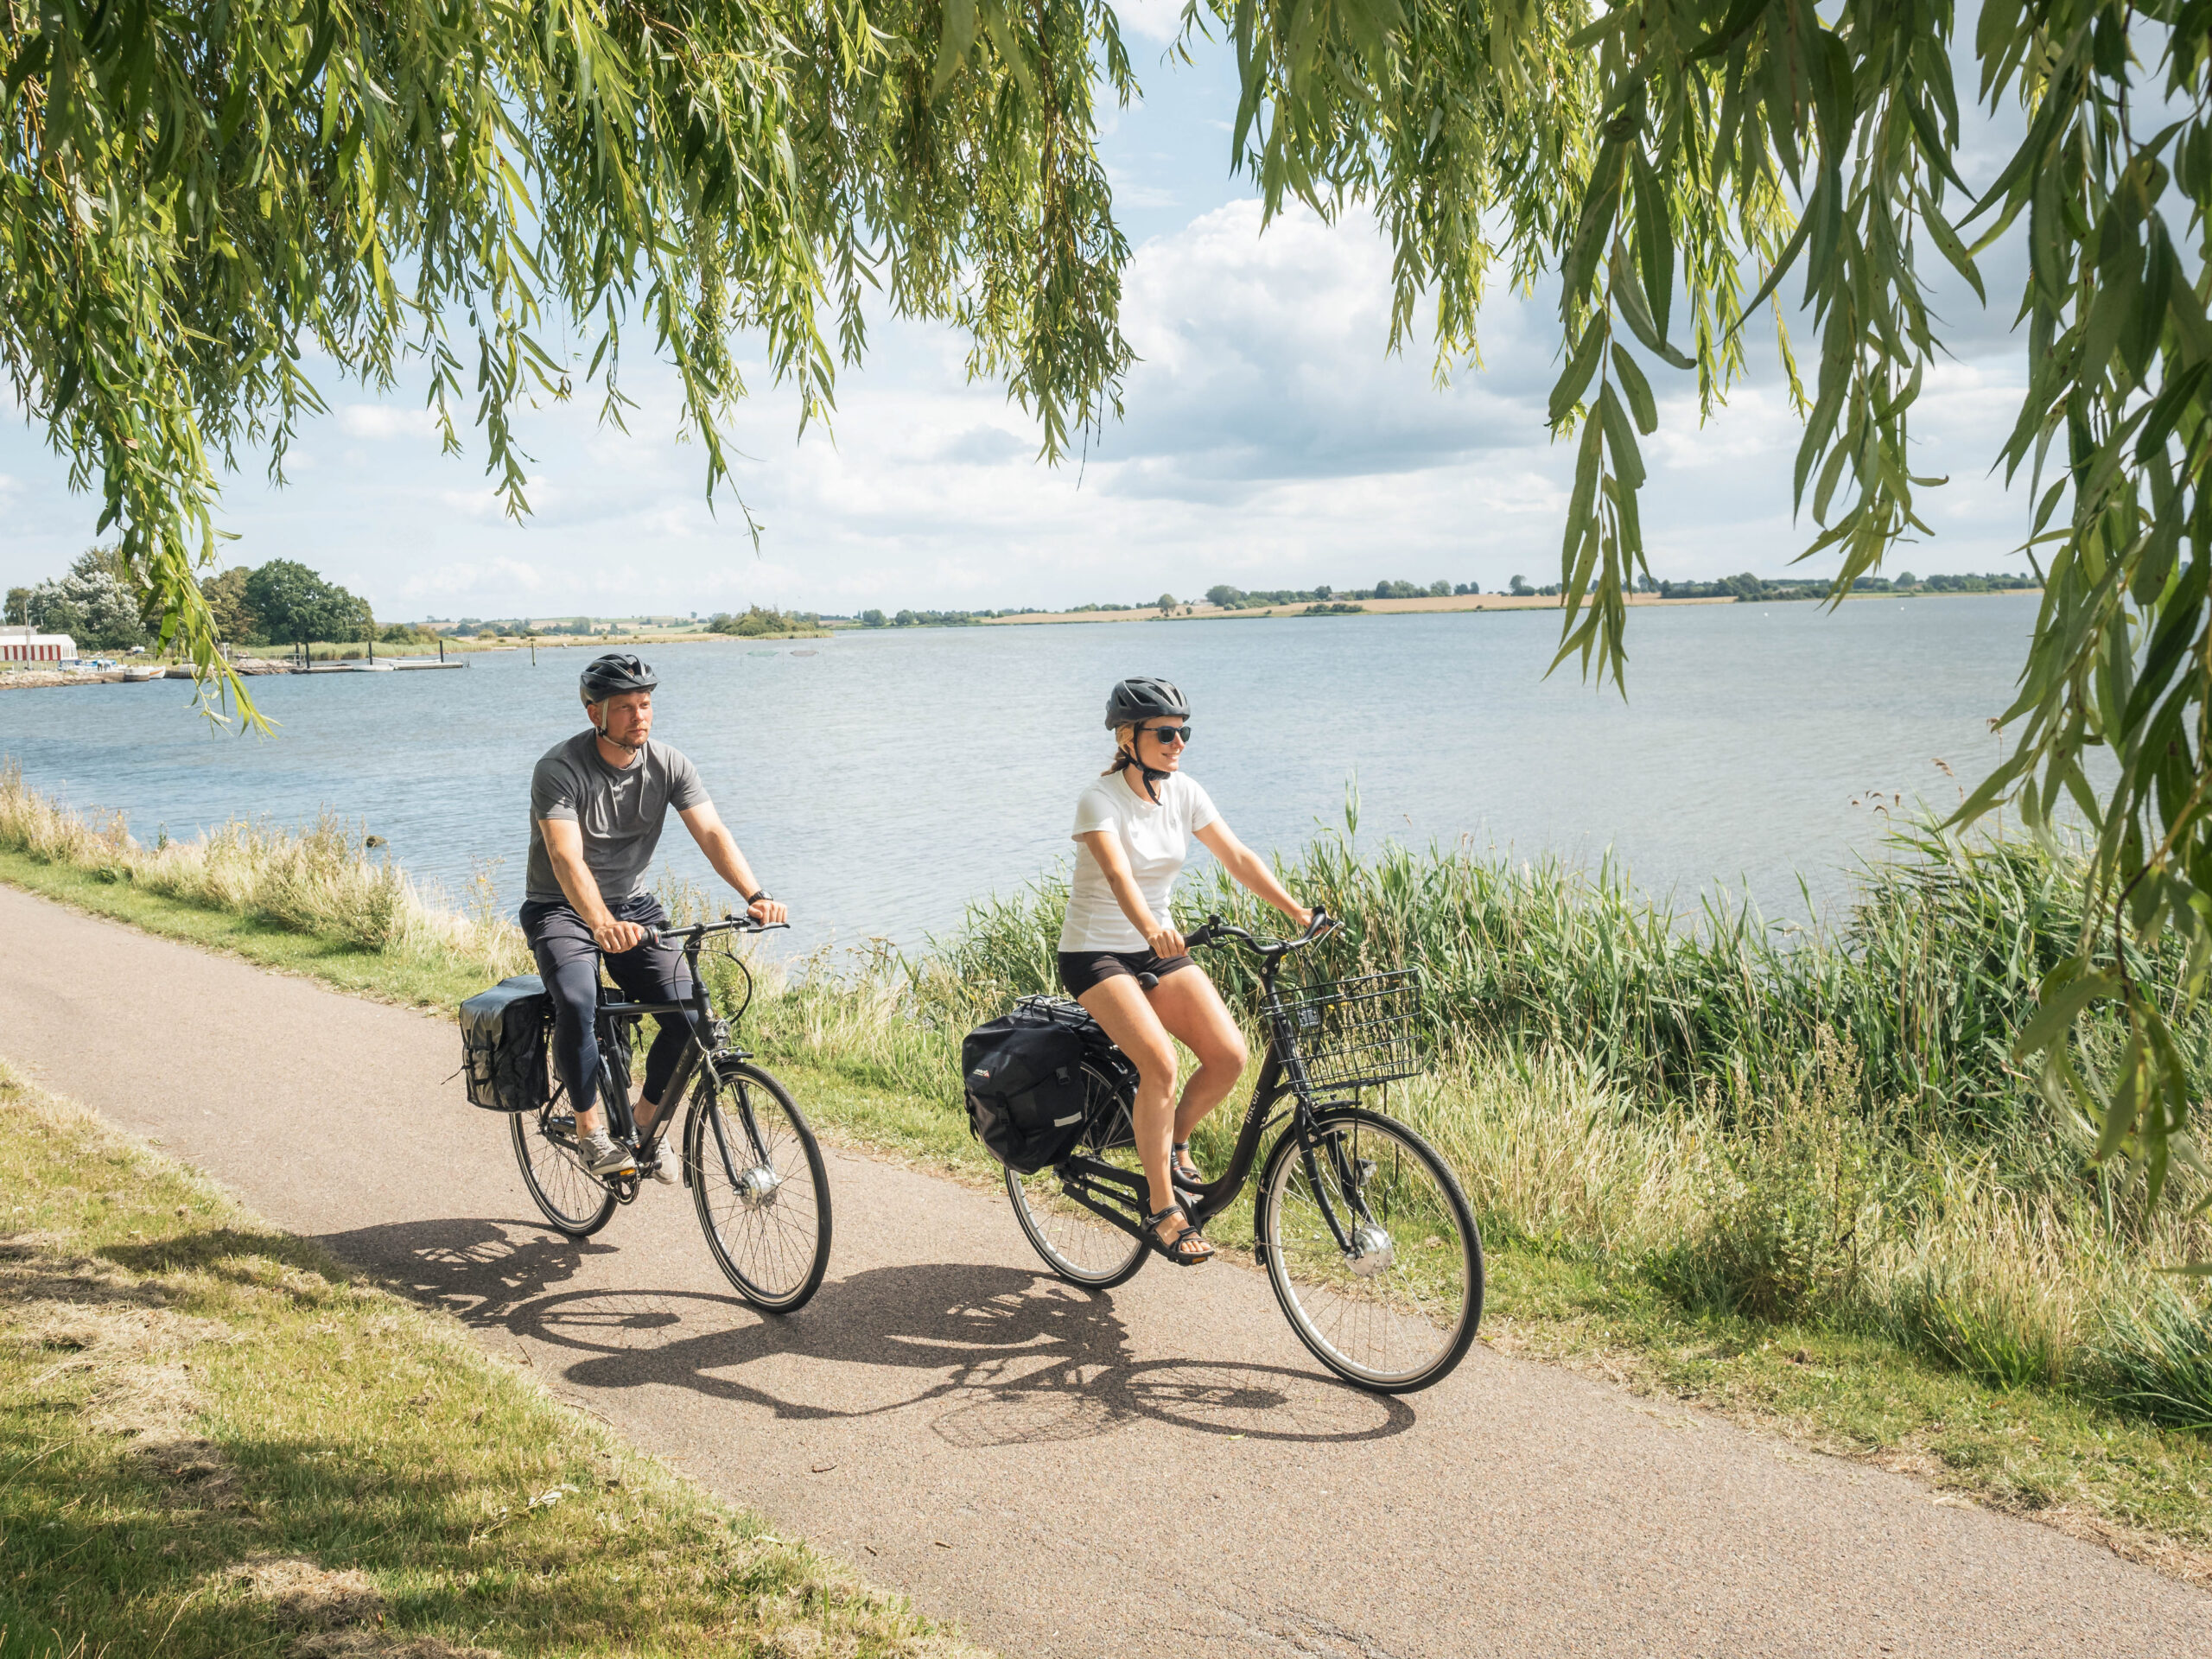 Tourists come to Denmark to escape excessive heat